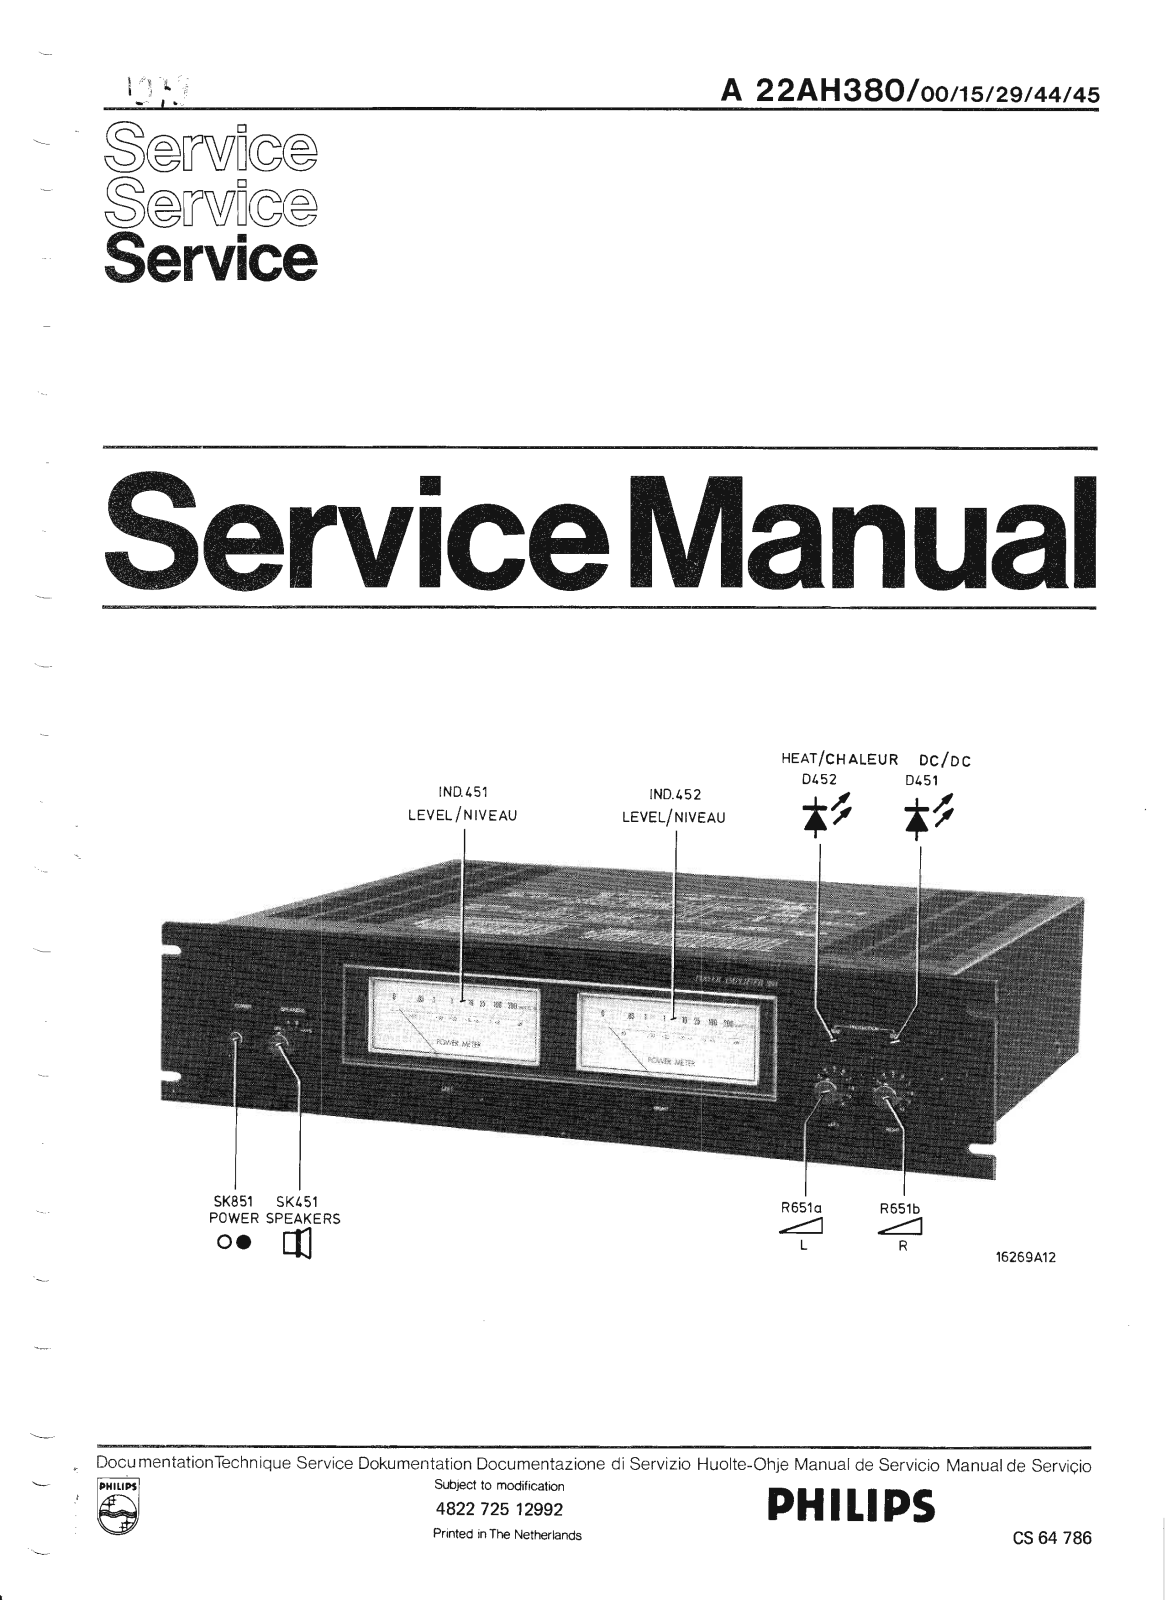 Philips 22-AH-380 Service Manual